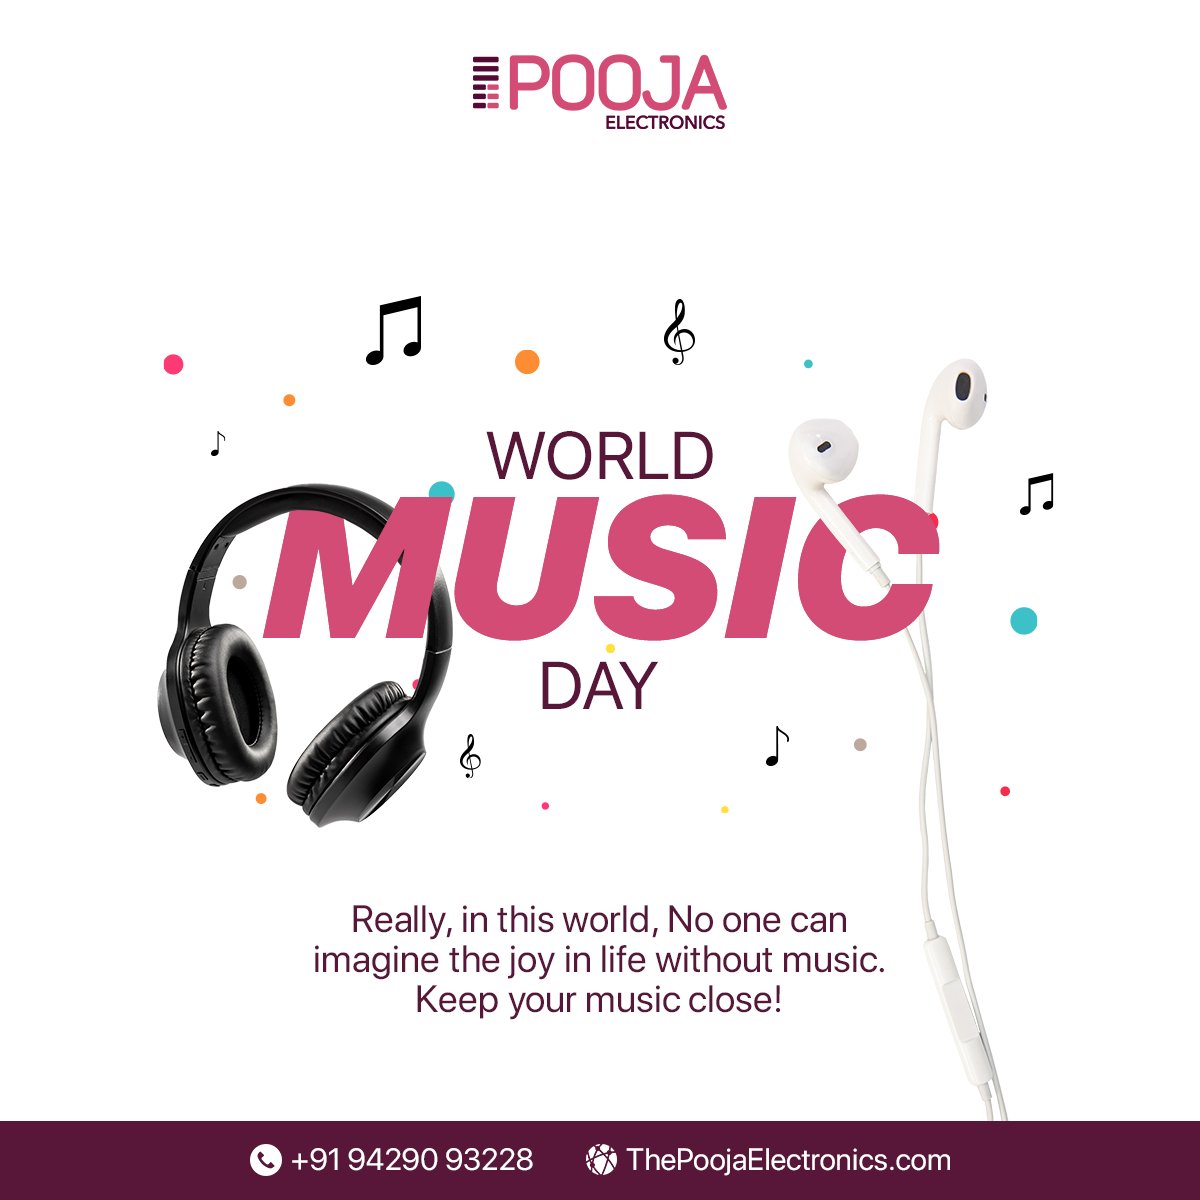 Embrace the rhythm and unite the world. Happy World Music Day!
.
#WorldMusicDay #MusicUnites #GlobalMelodies #MusicalBliss #TuneIn #HarmonyDay #BeatDrop #CelebratingDiversity #MusicalFusion #RhythmicRealm #SoulfulTunes #SymphonyOfSounds #MusicKnowsNoBoundaries #HarmonyOfSounds